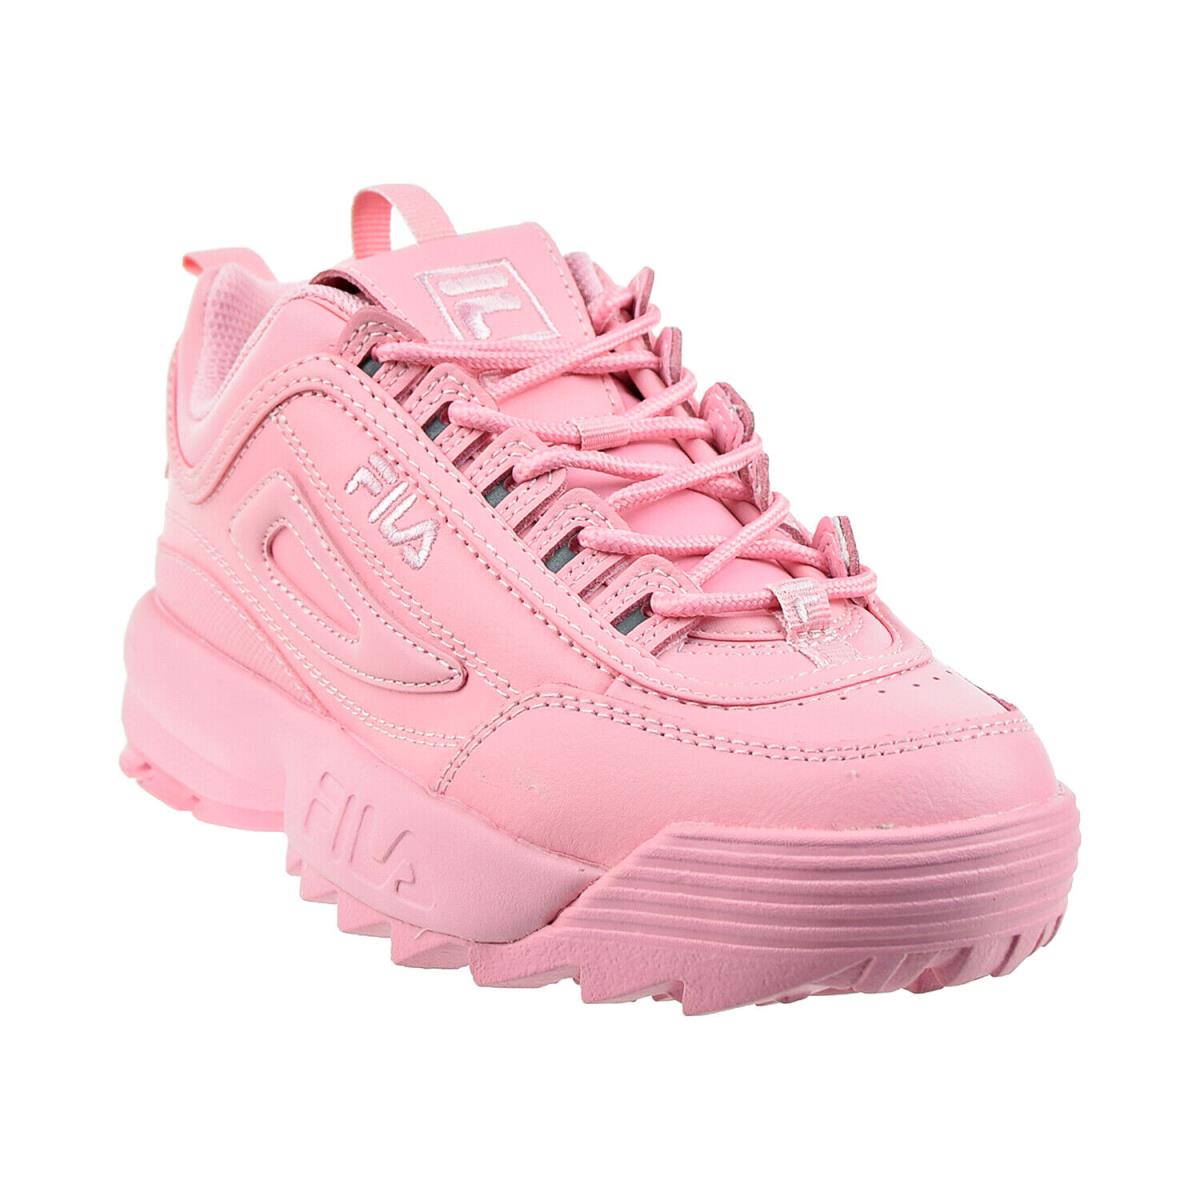 Fila Disruptor II Premium Women`s Shoes Coral Blush 5xm01763-651 - 